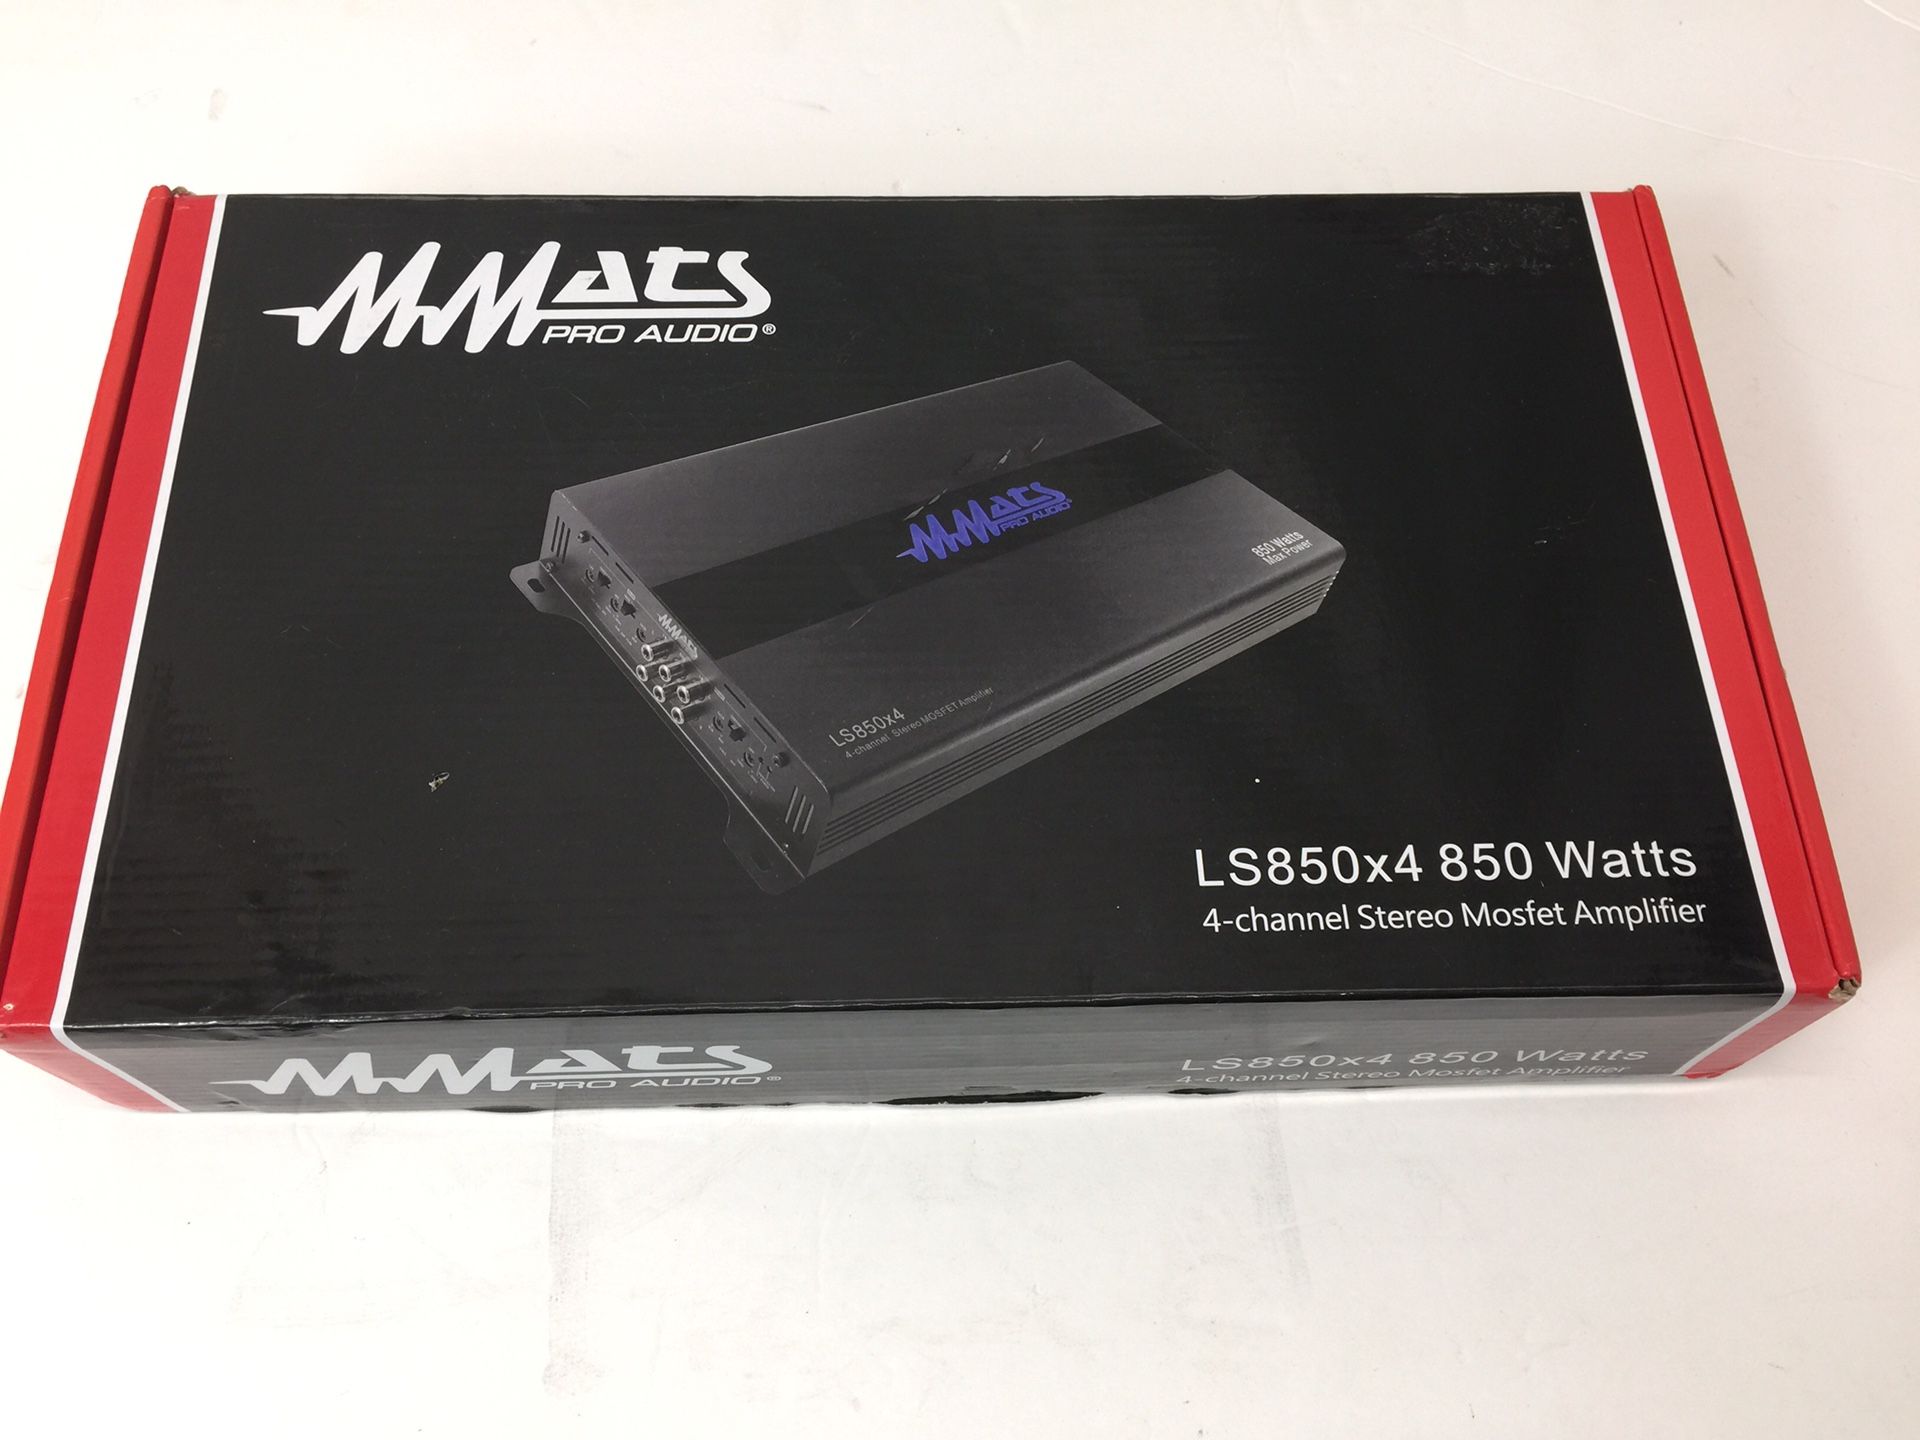 MMATS Pro Audio LS850X4 850 Watts 4-Channel Stereo Mosfet Amplifier (MXP014978)